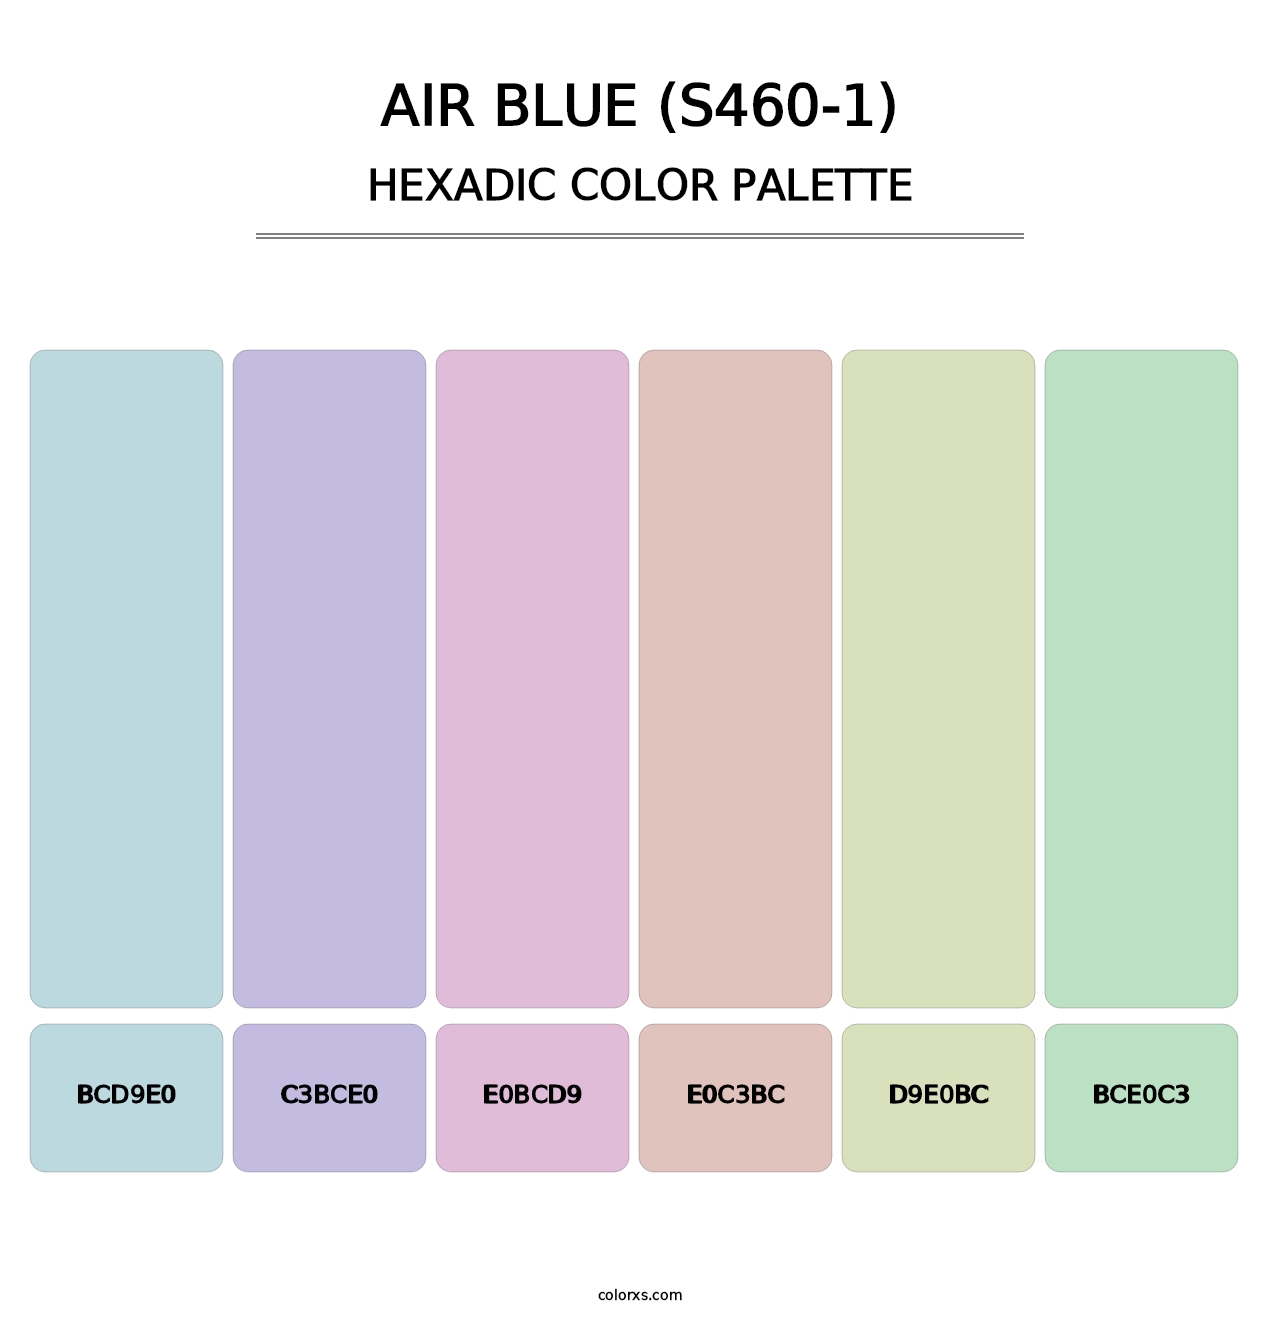 Air Blue (S460-1) - Hexadic Color Palette